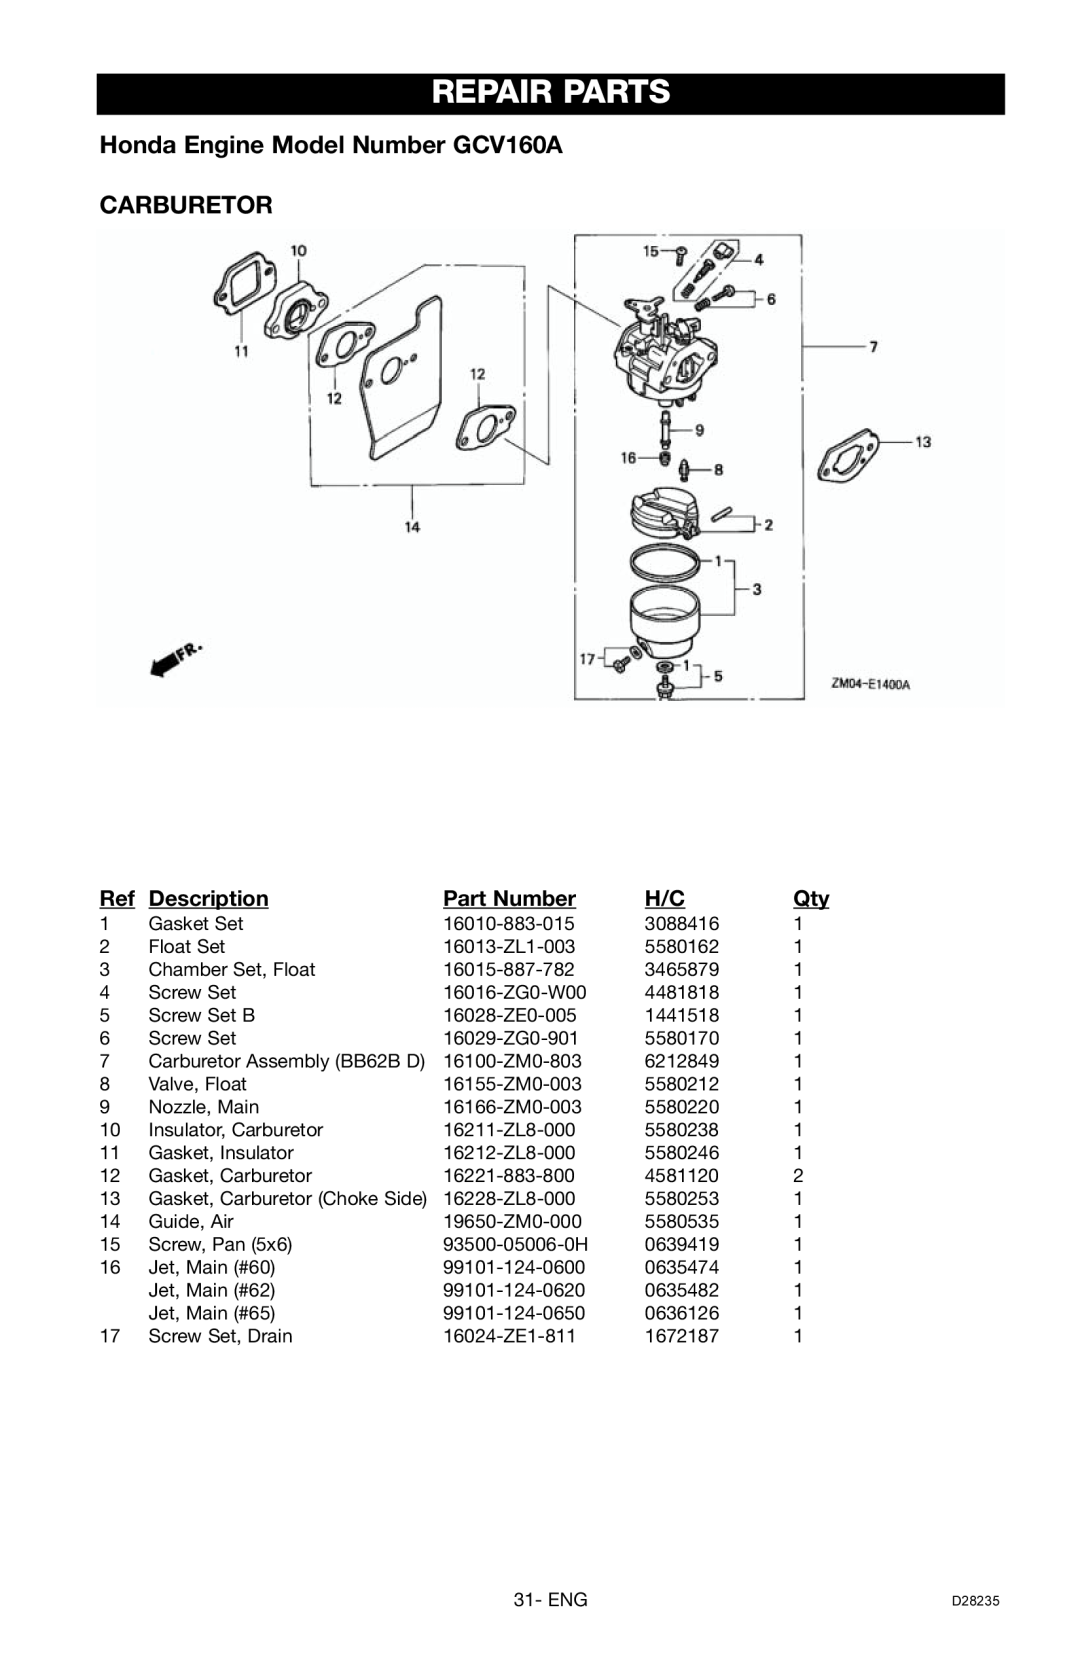 Craftsman 919.672241, D28235 Repair Parts, Honda Engine Model Number GCV160A CARBURETOR, Description, Part Number 